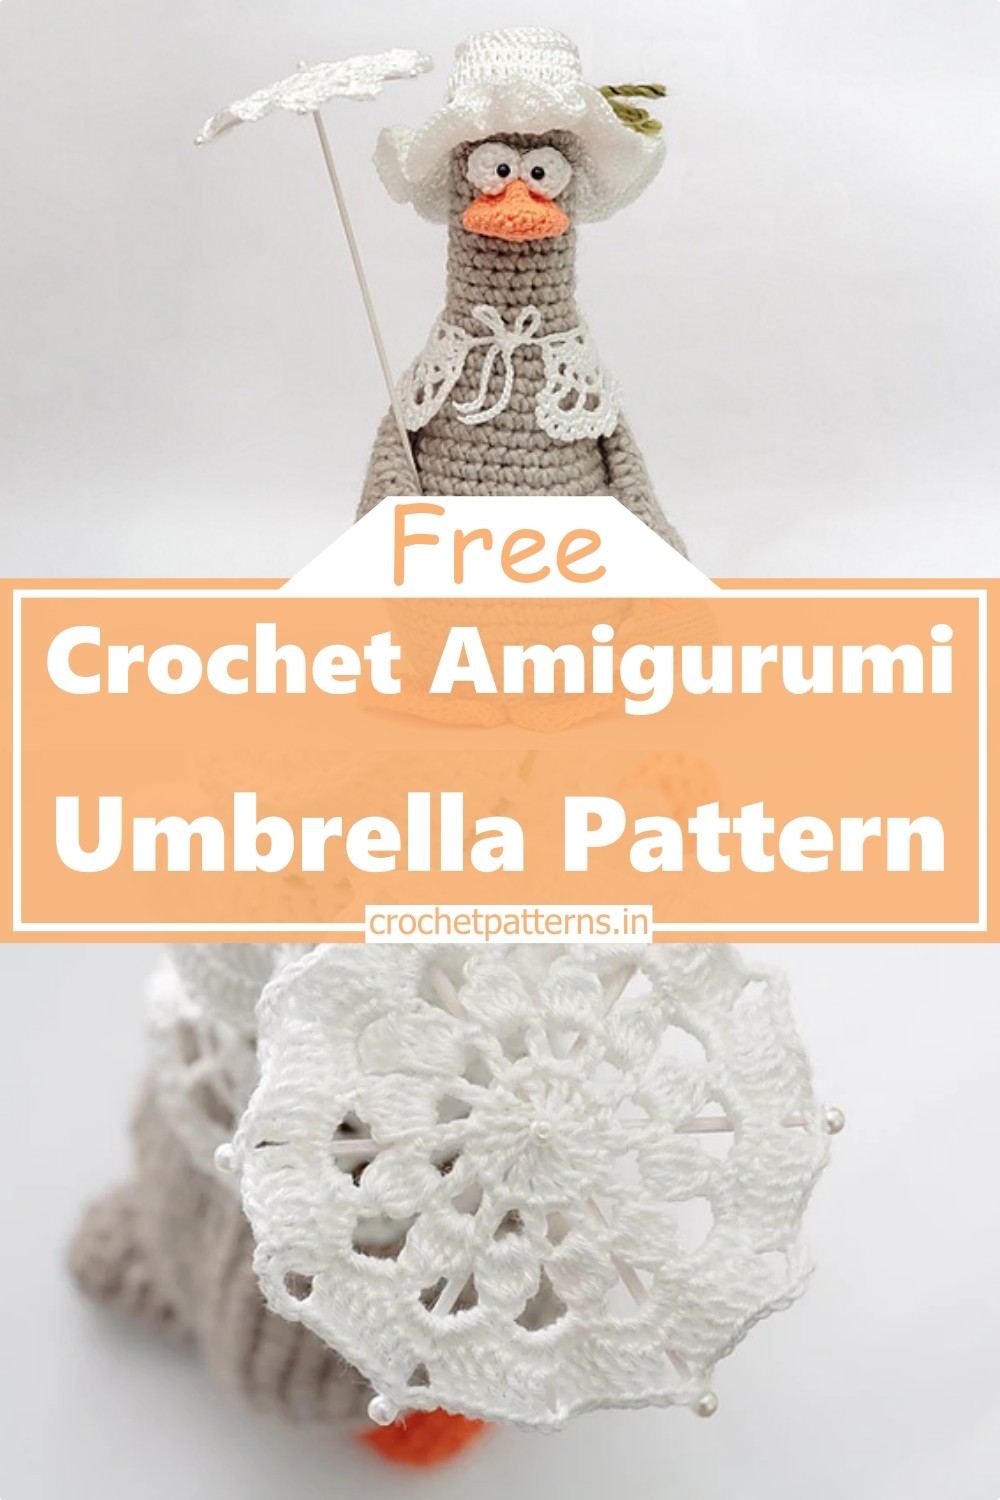 Crochet Amigurumi Umbrella Pattern